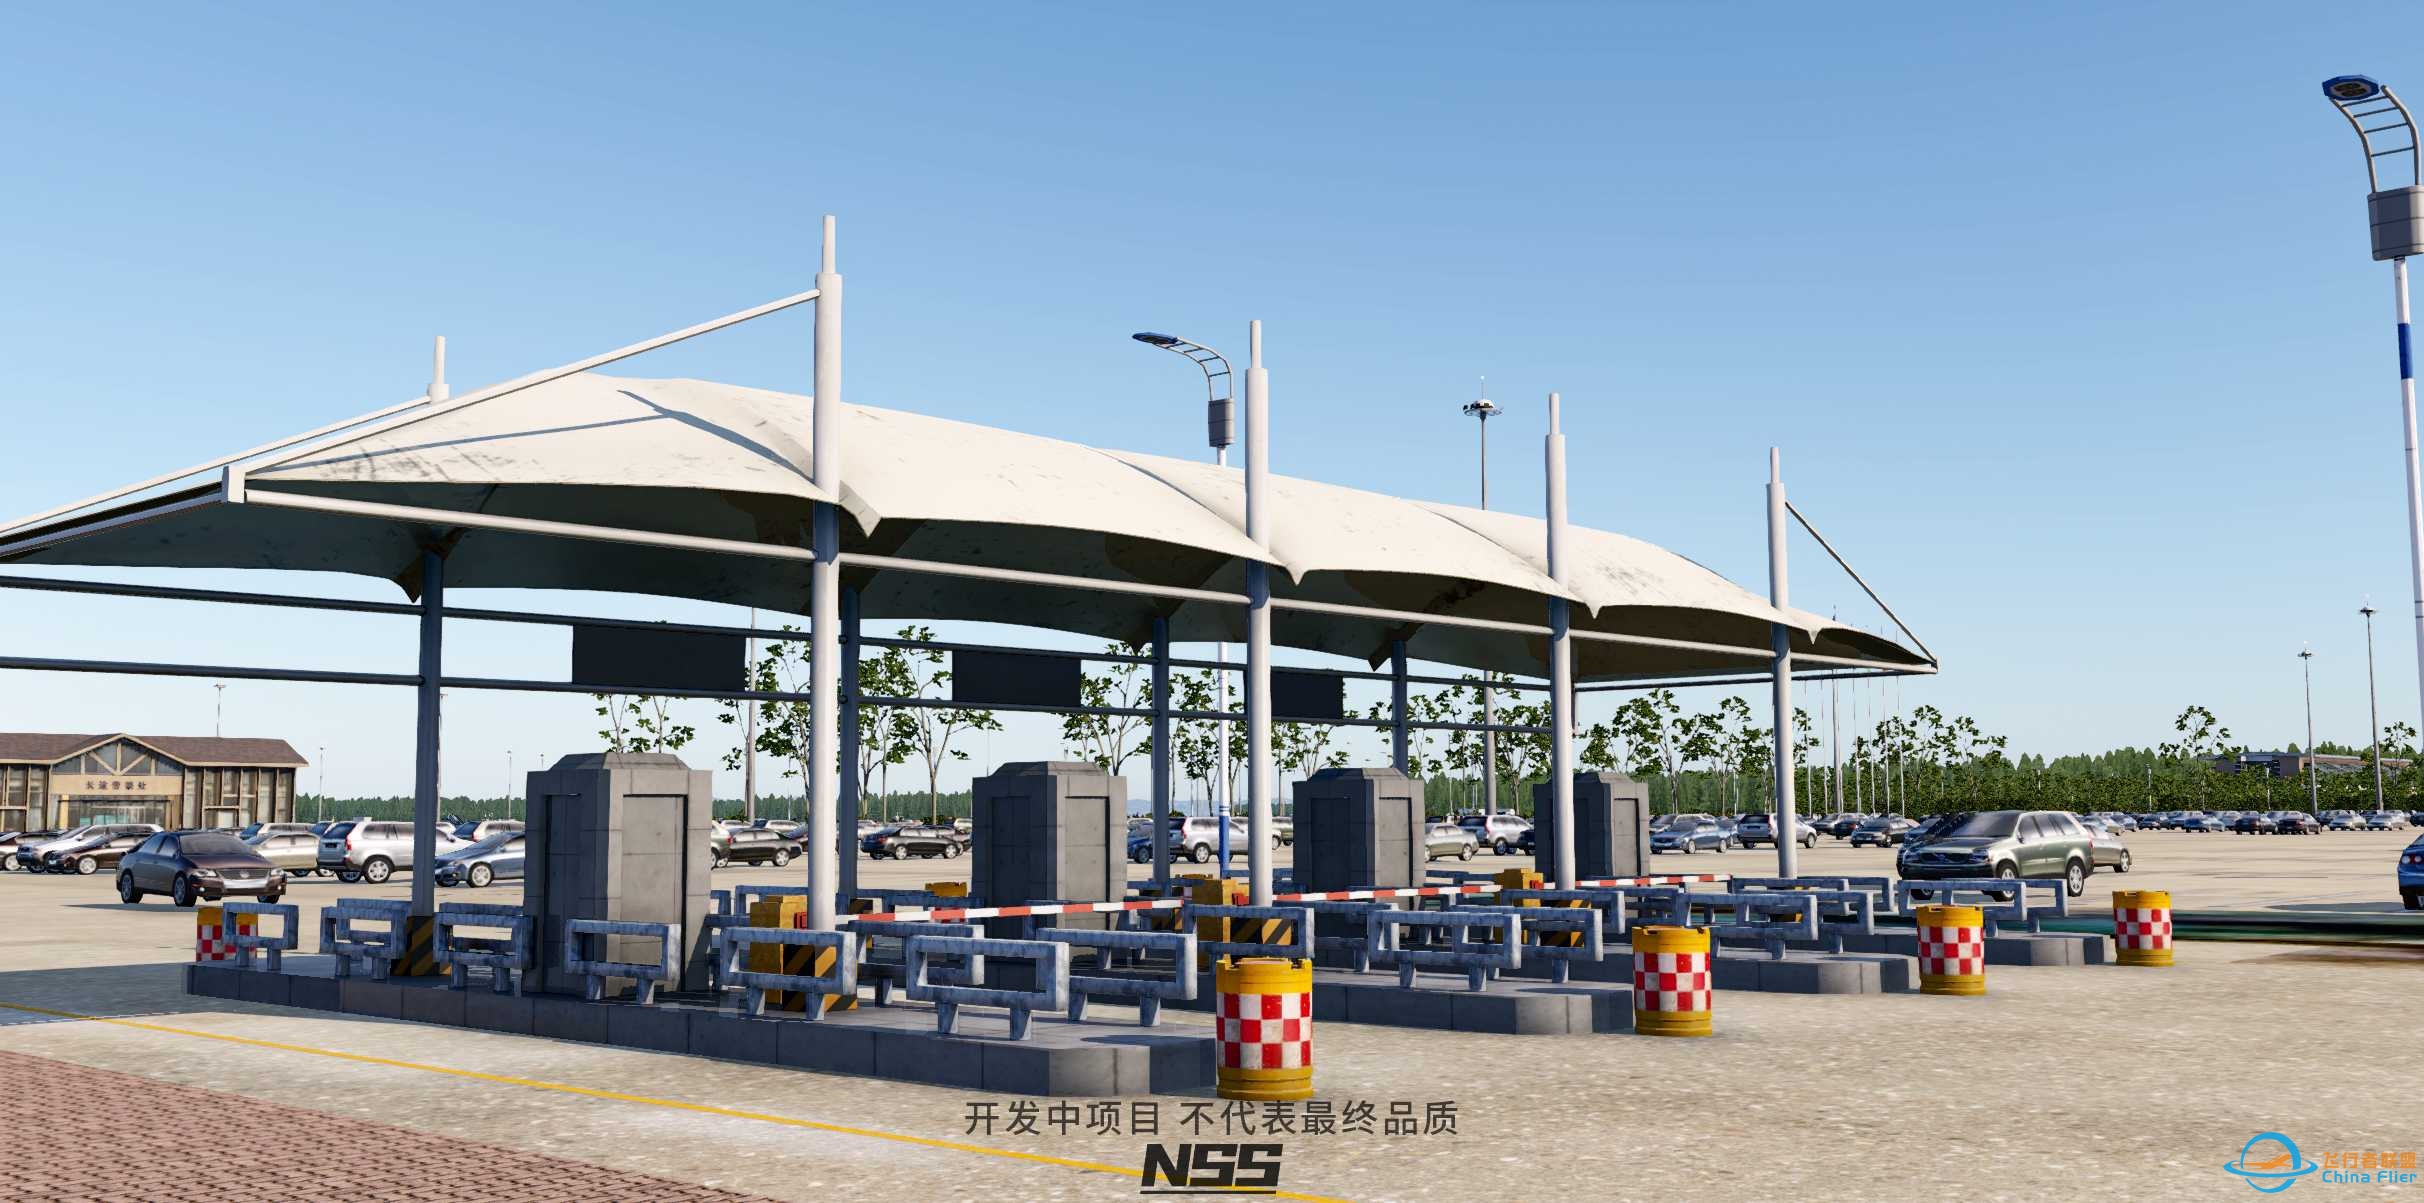 NSS地景开发组 ZSJN 济南遥墙国际机场项目预览 兼公布-7294 